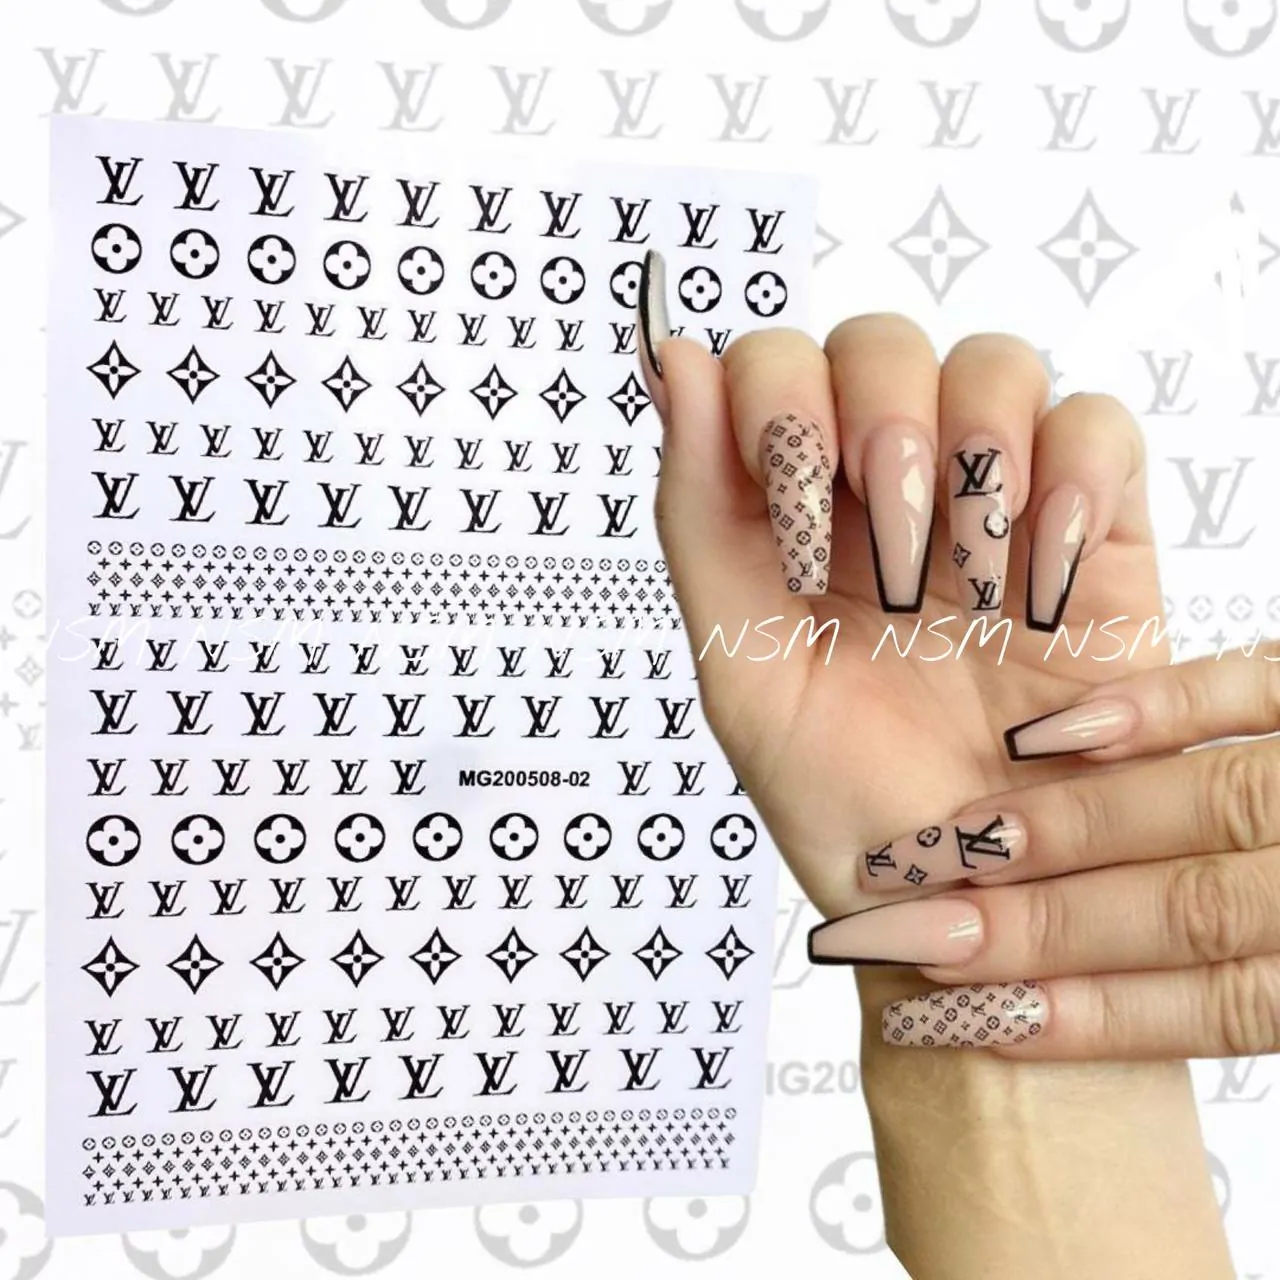 Fendi, Chanel And Louis Vuitton Brand Nail Art Sticker Sheets